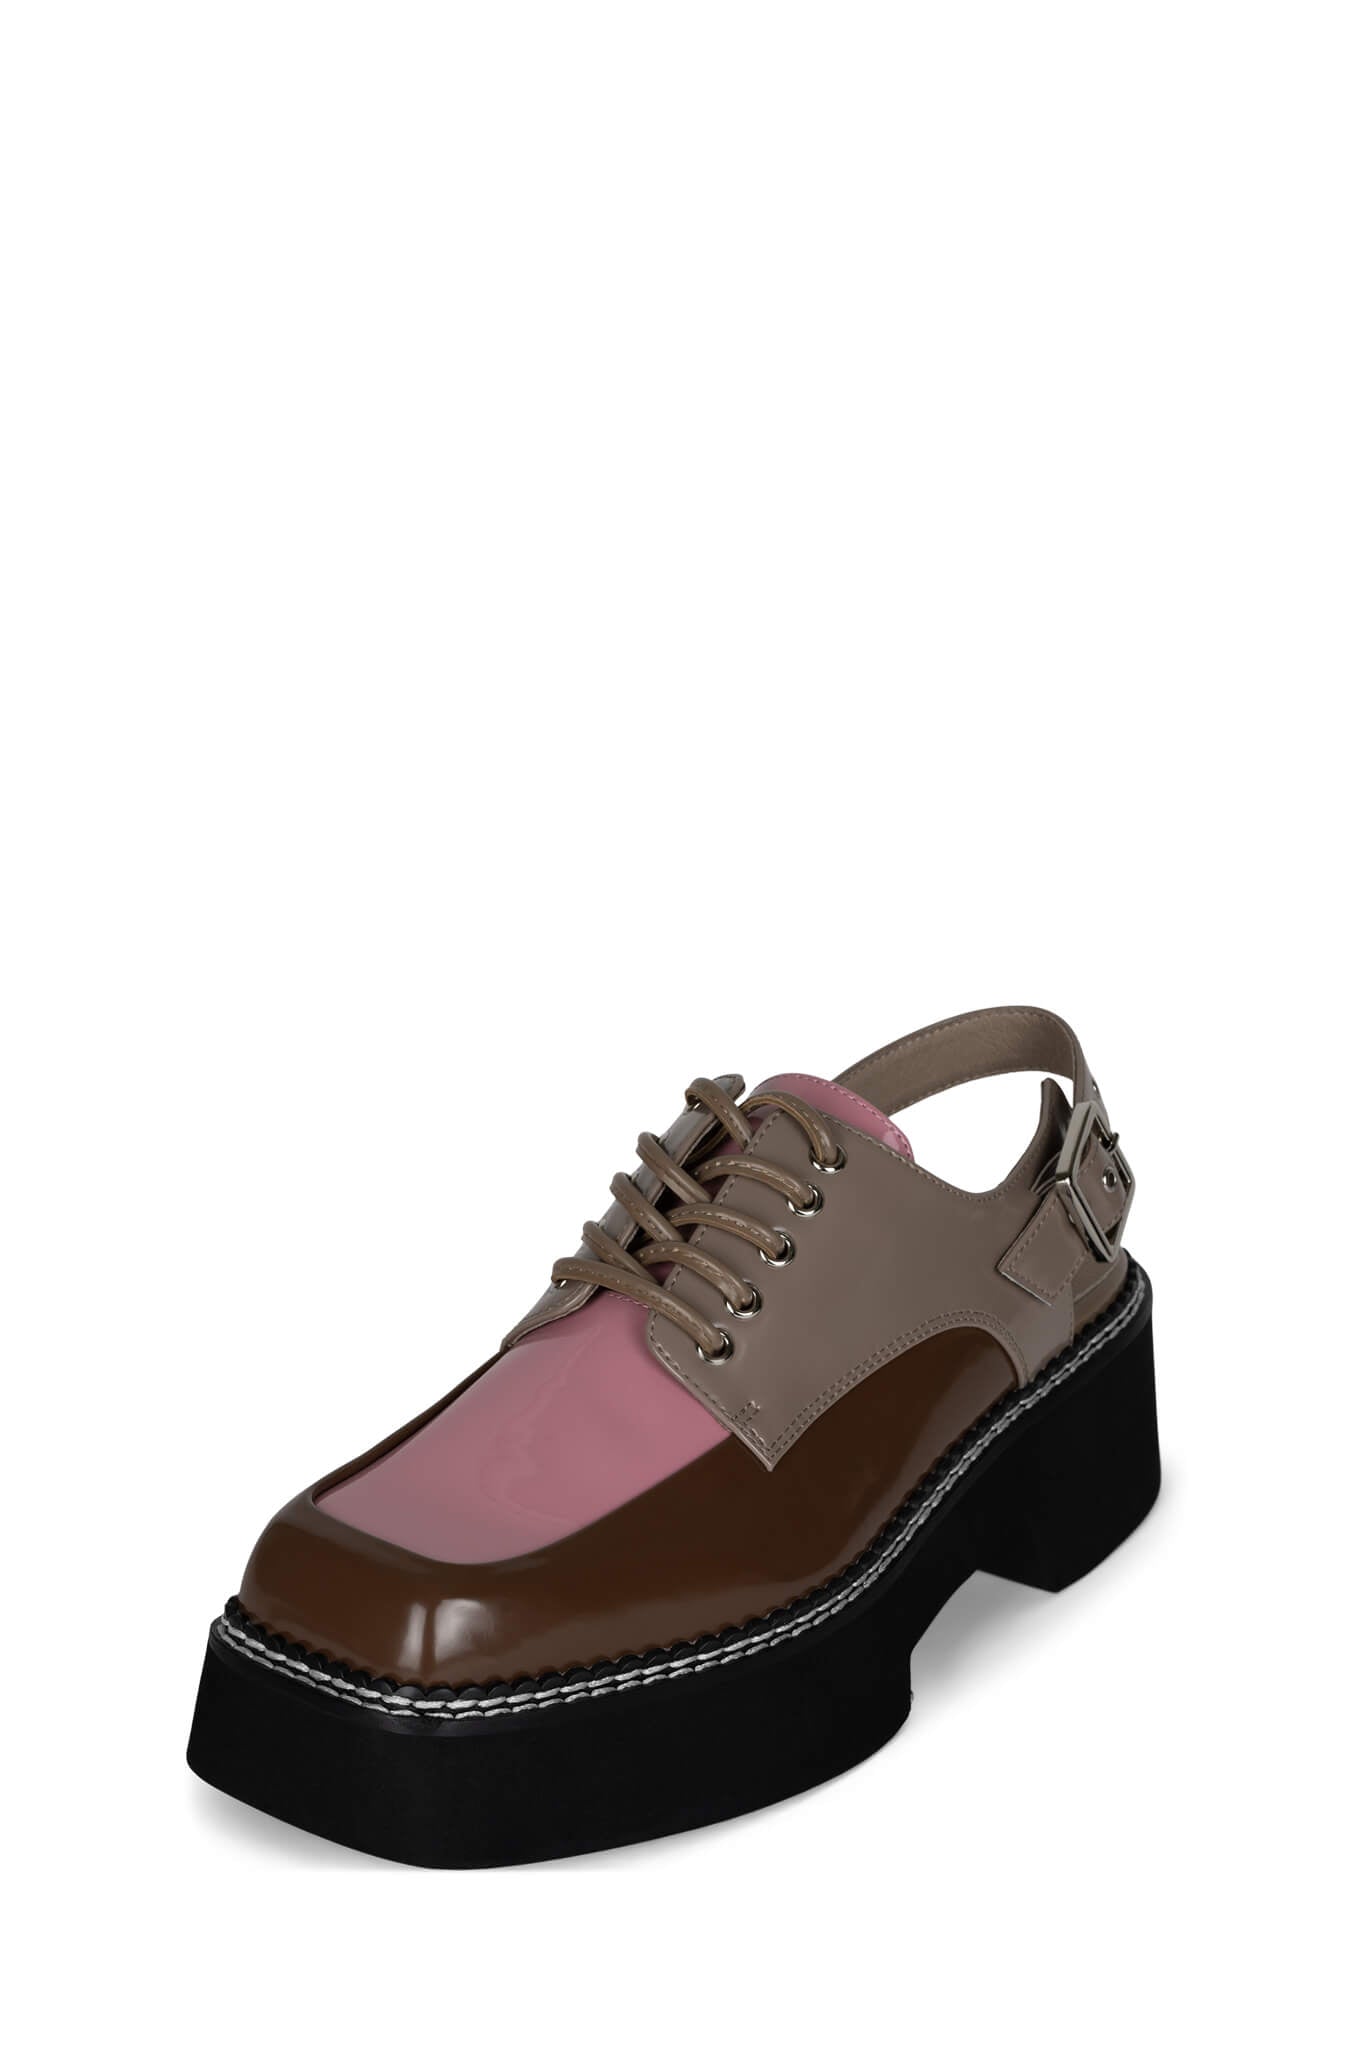 Jeffrey Campbell Oxford Shoes Discount | bellvalefarms.com